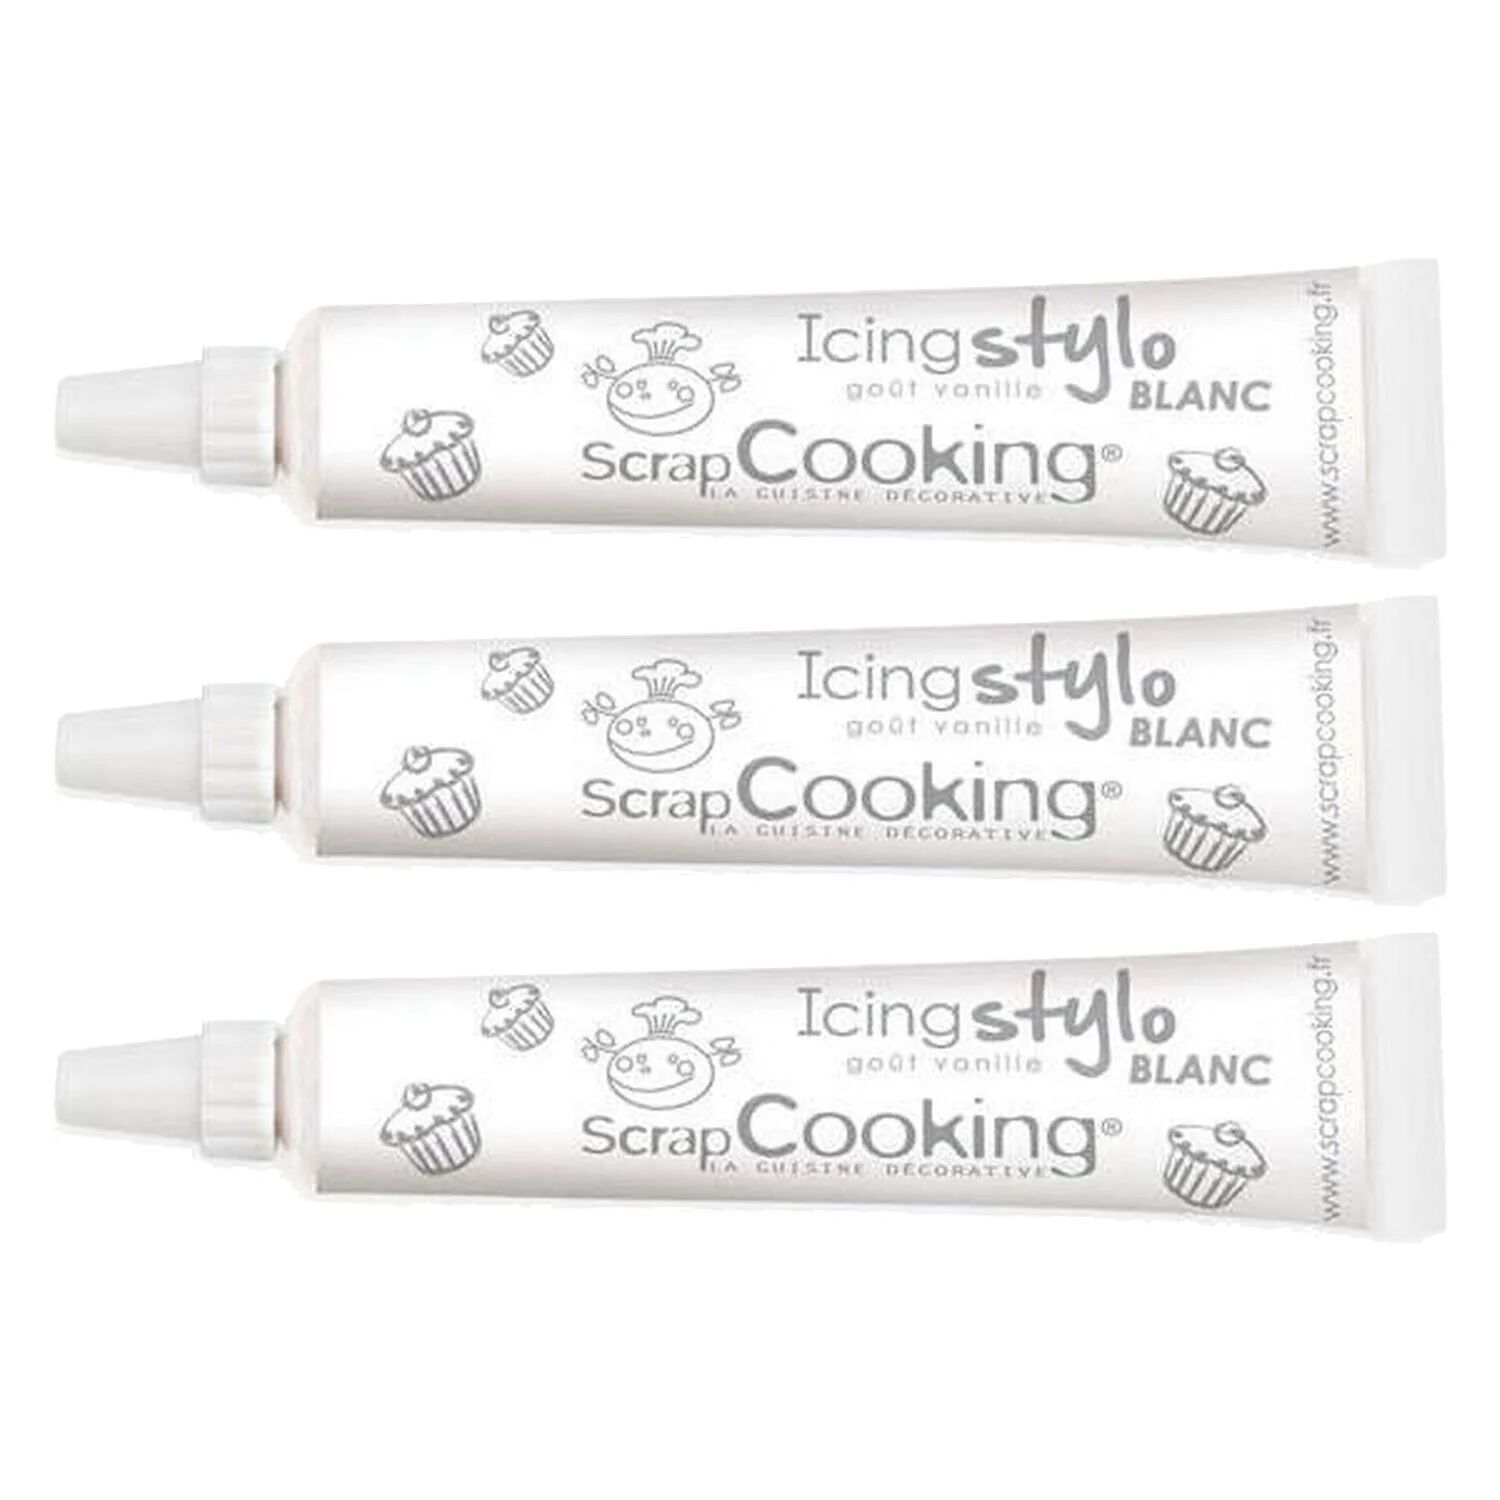 3 stylos de glaçage blanc goût vanille Scrapcooking